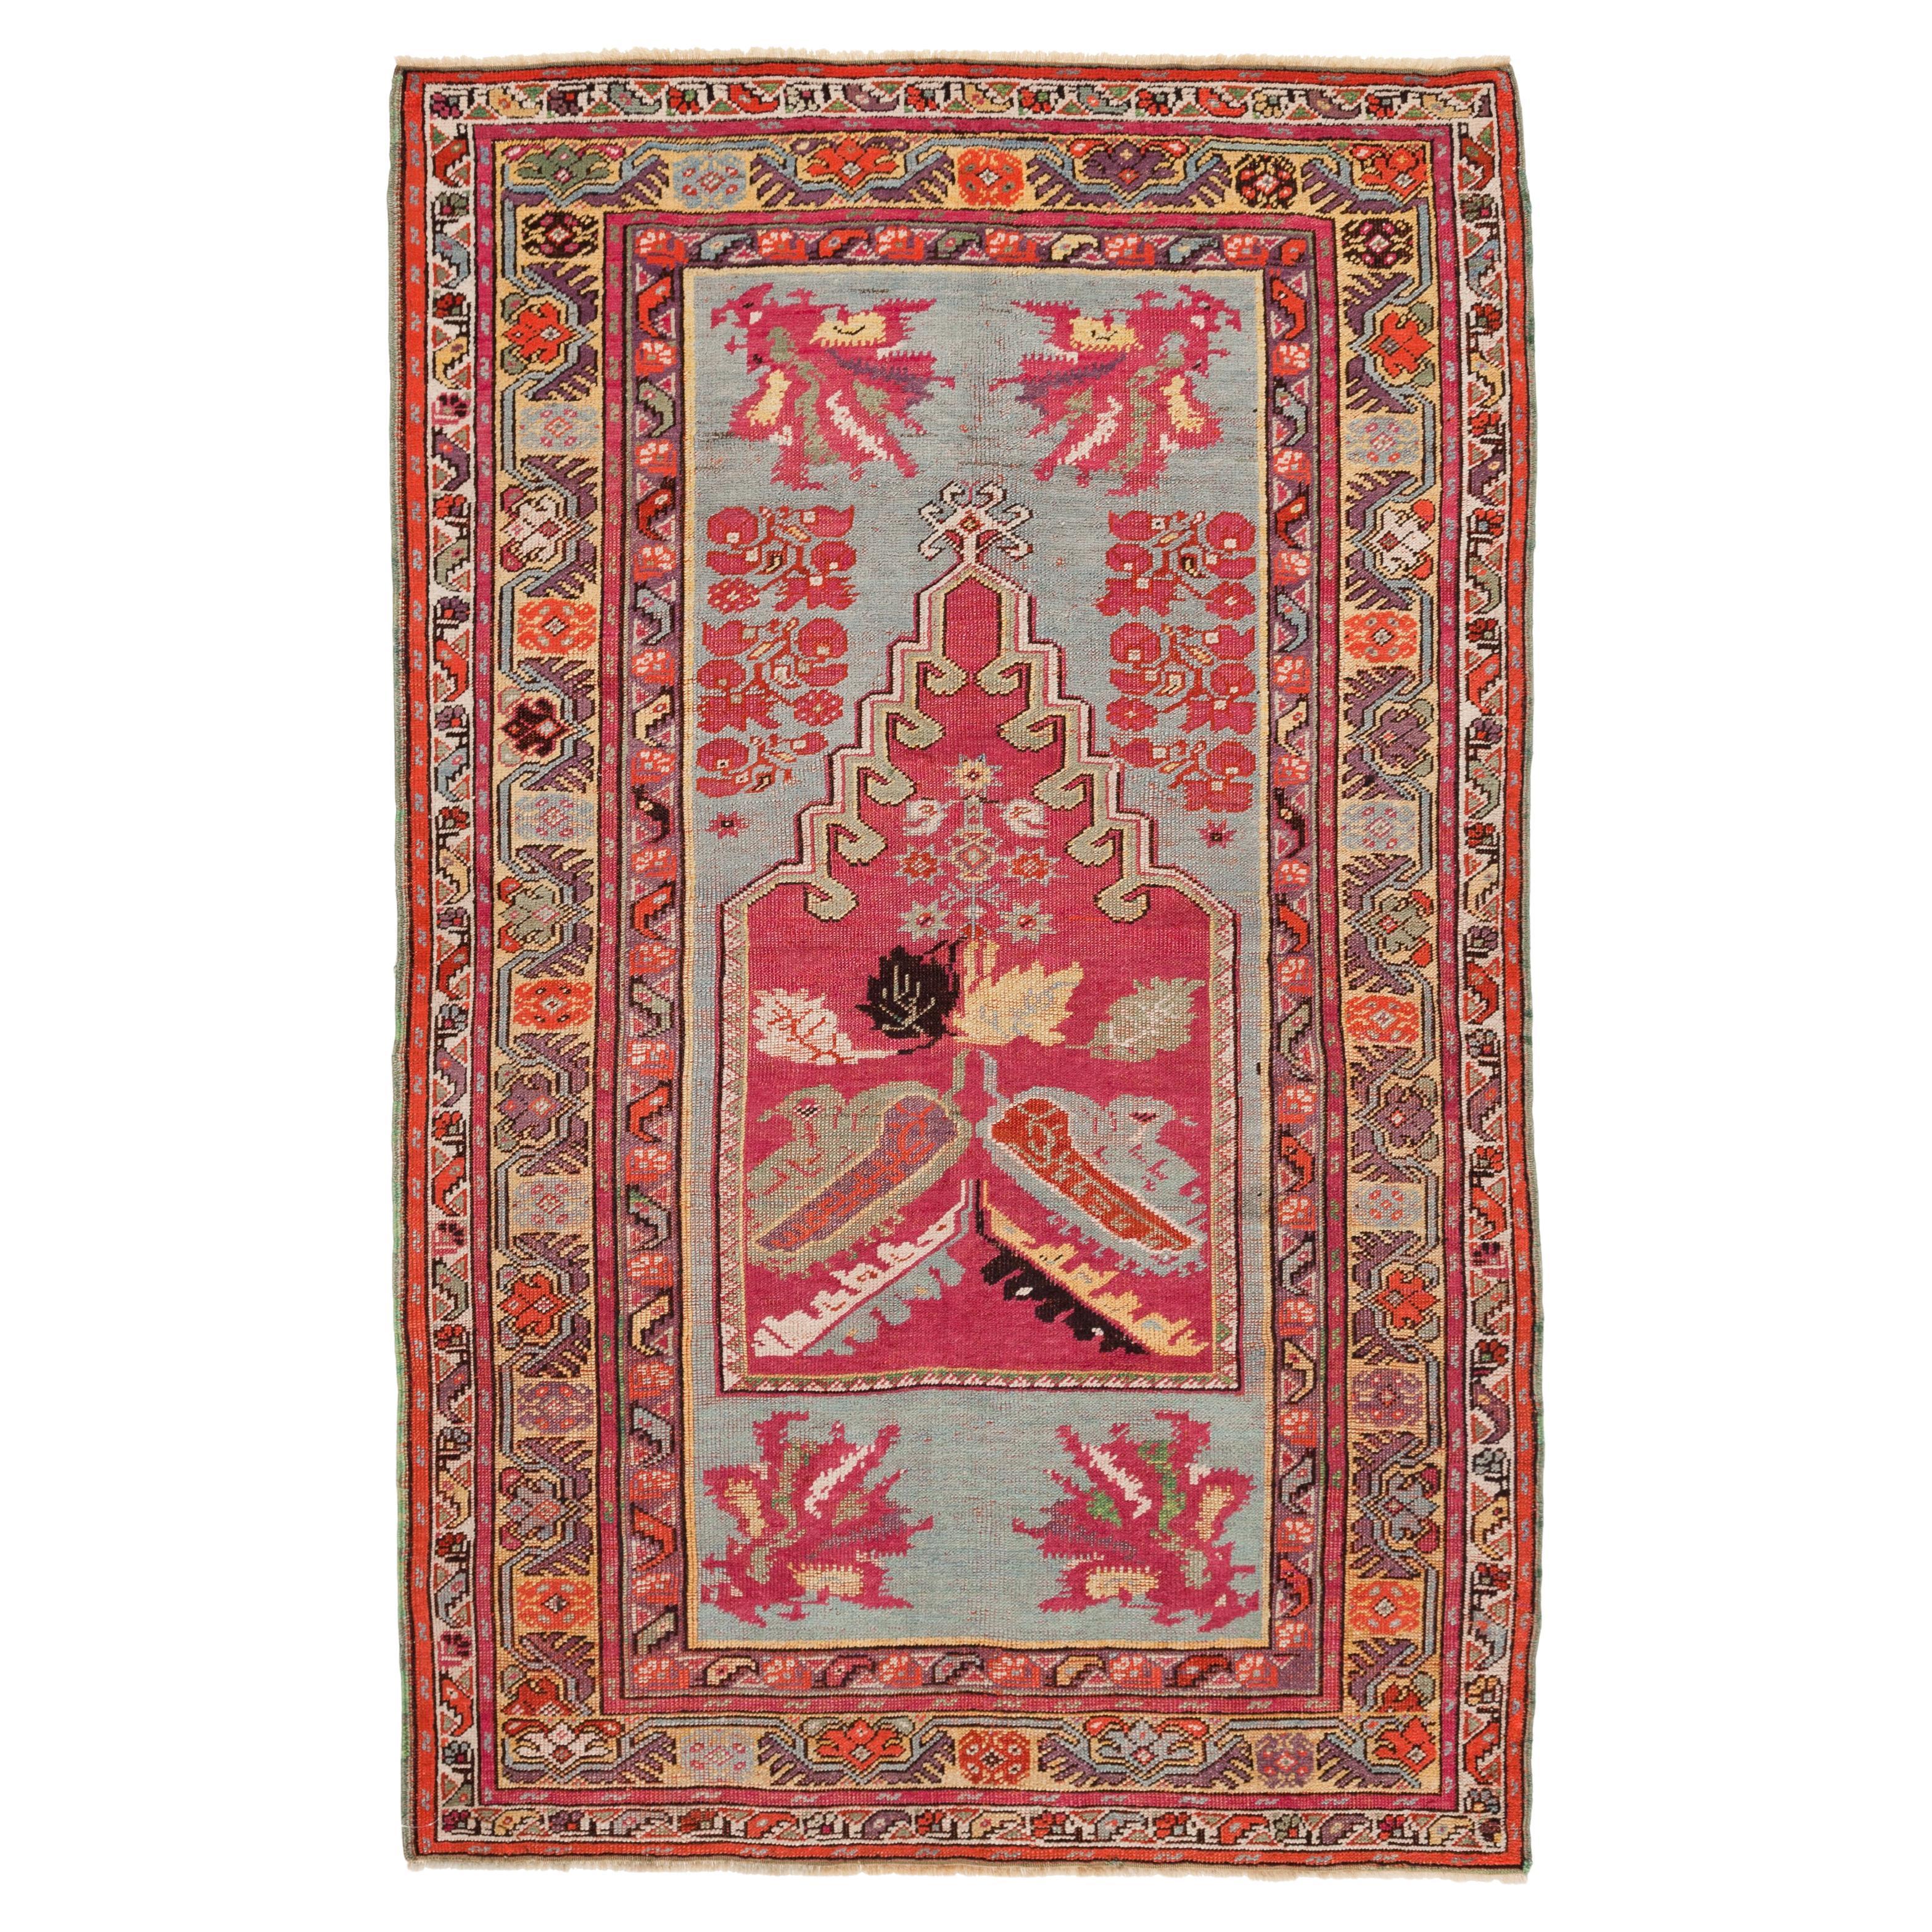 Antique Mucur 'Mudjar / Mujur' Prayer Rug, Turkish Central Anatolian Carpet For Sale